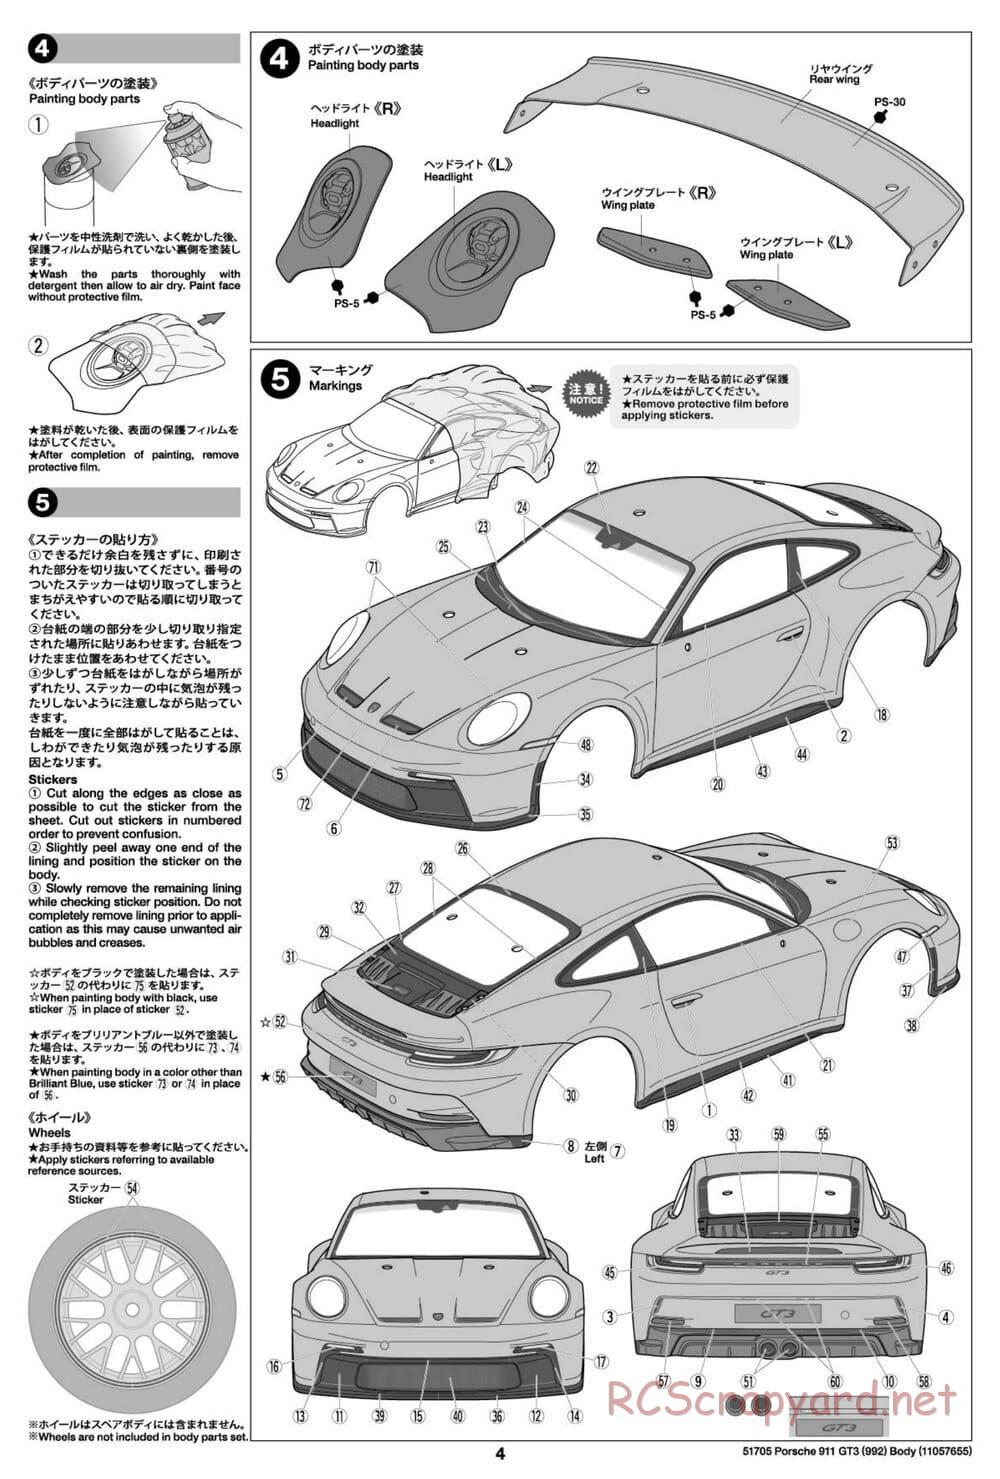 Tamiya - Porsche 911 GT3 (992) - TT-02 Chassis - Body Manual - Page 4